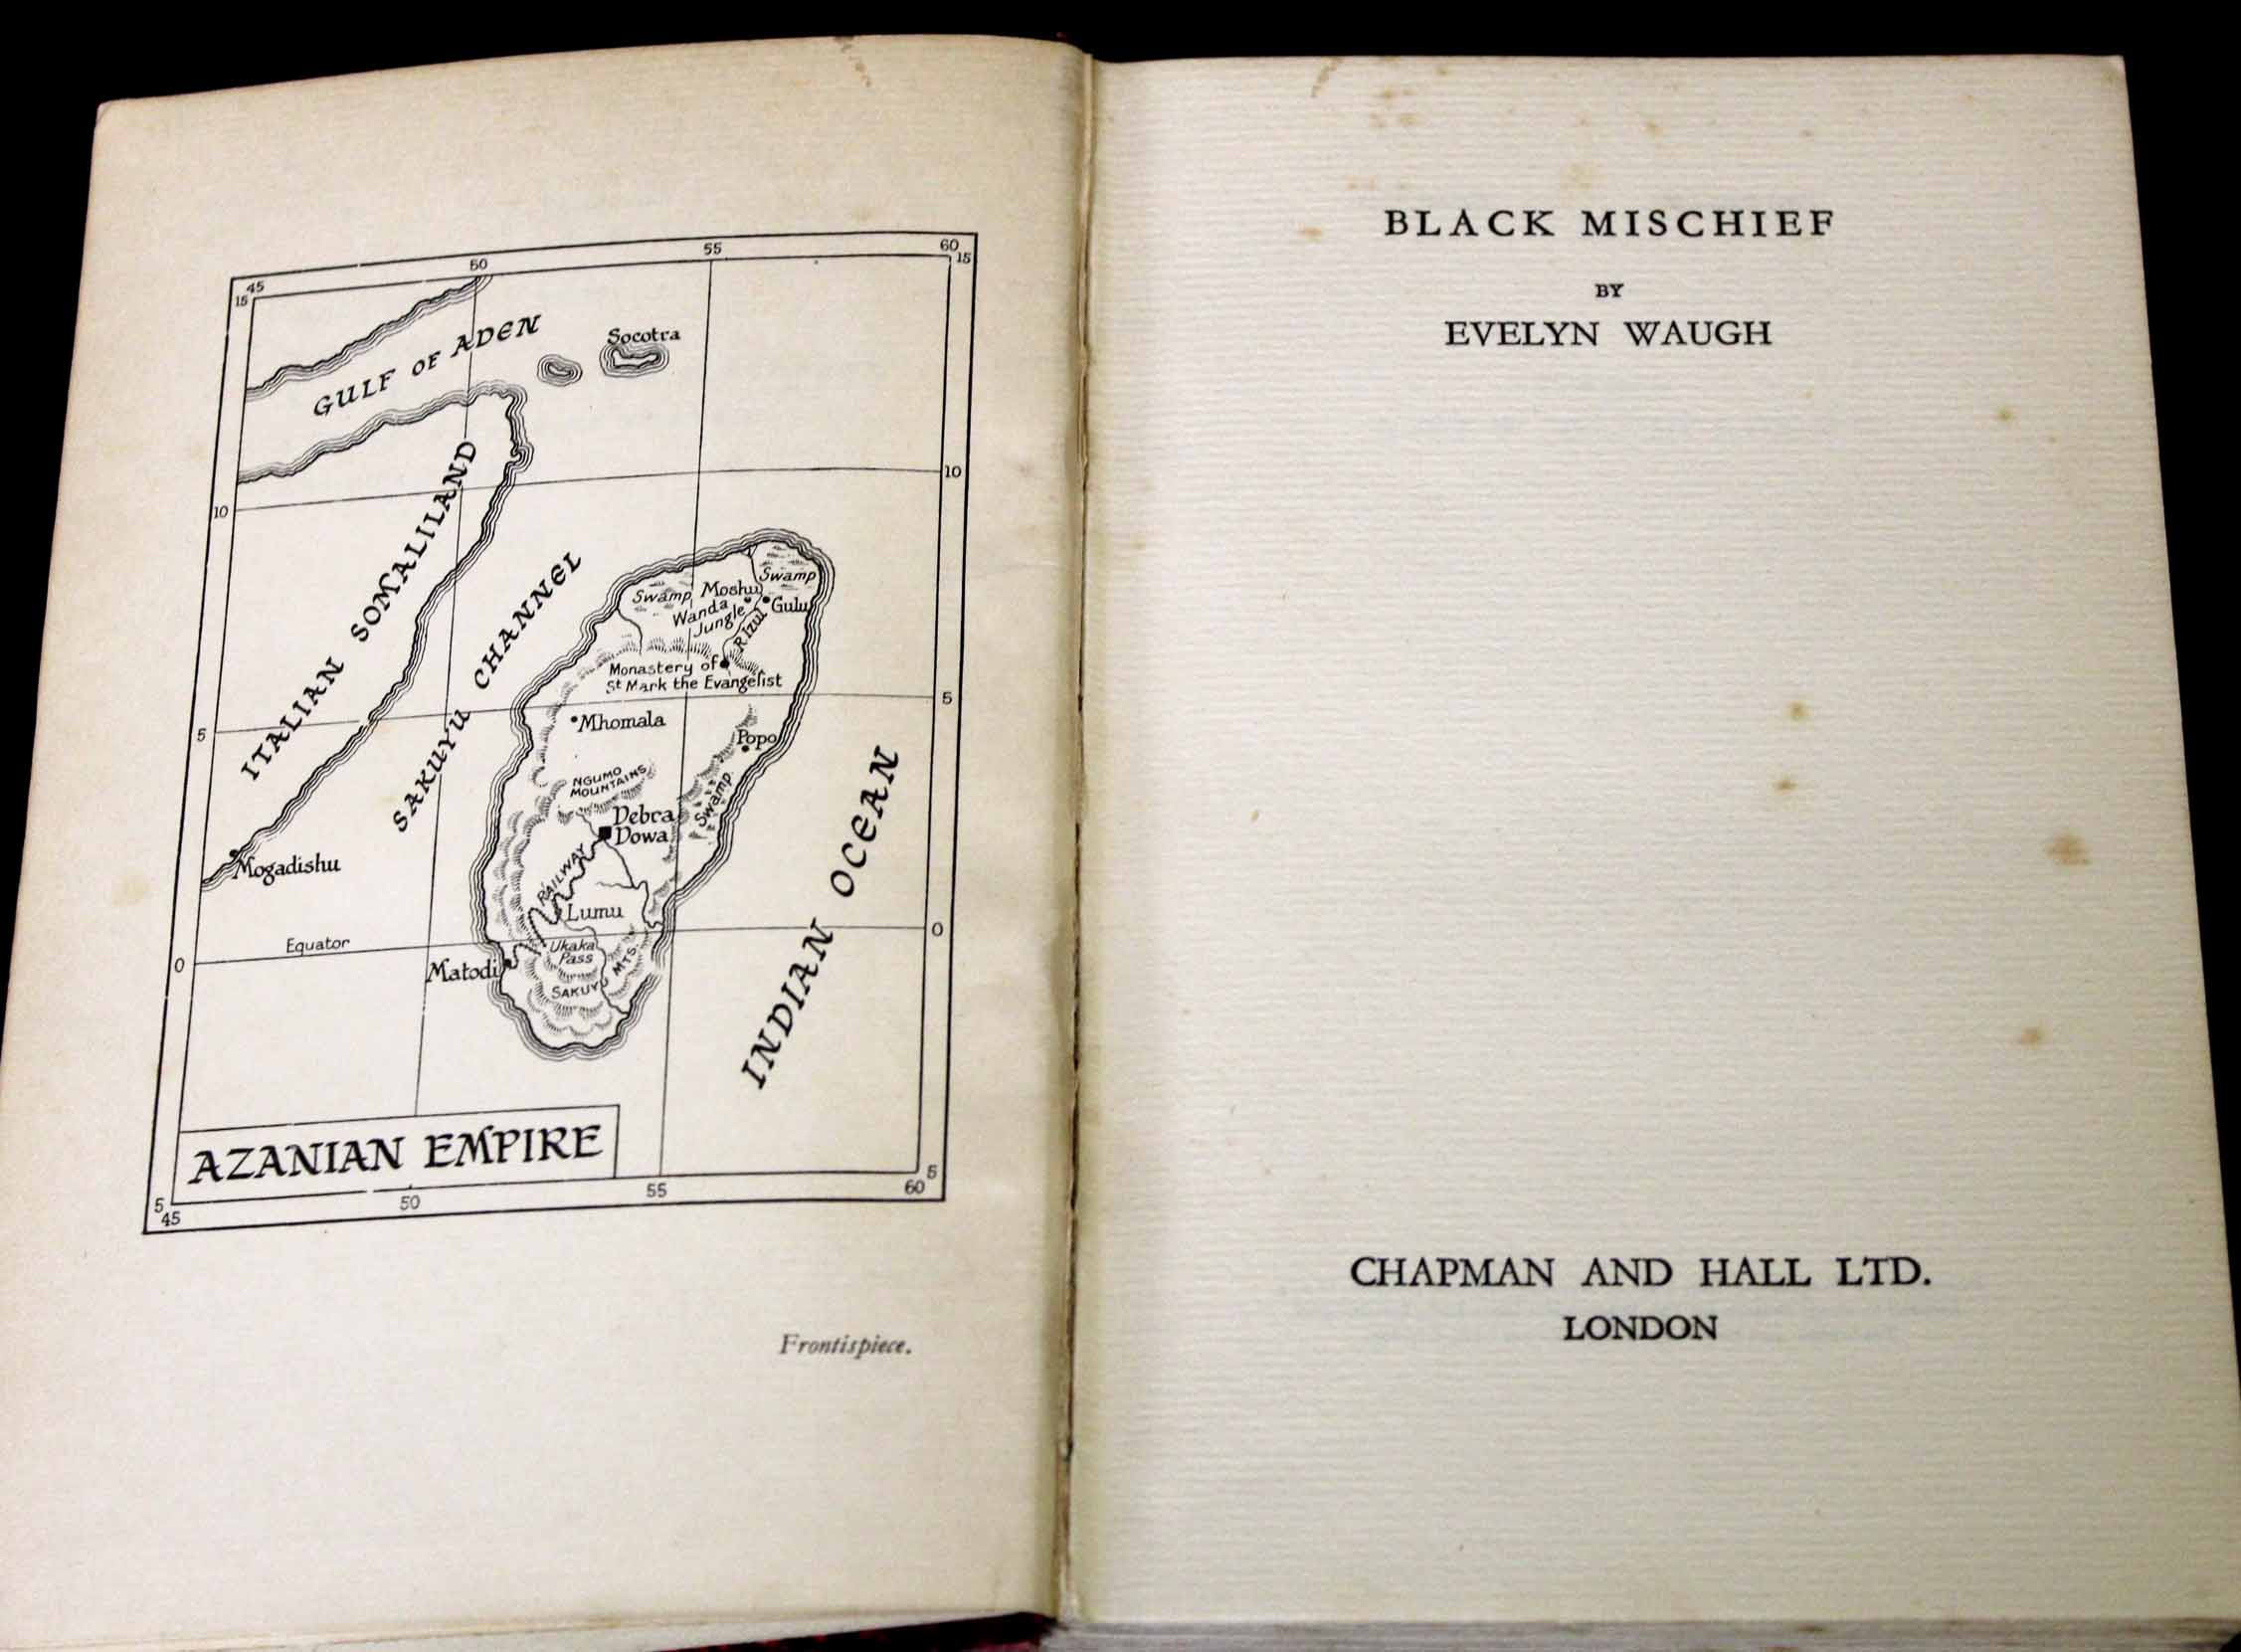 EVELYN WAUGH: BLACK MISCHIEF, London, Chapman & Hall, 1932, 1st edition, original cloth